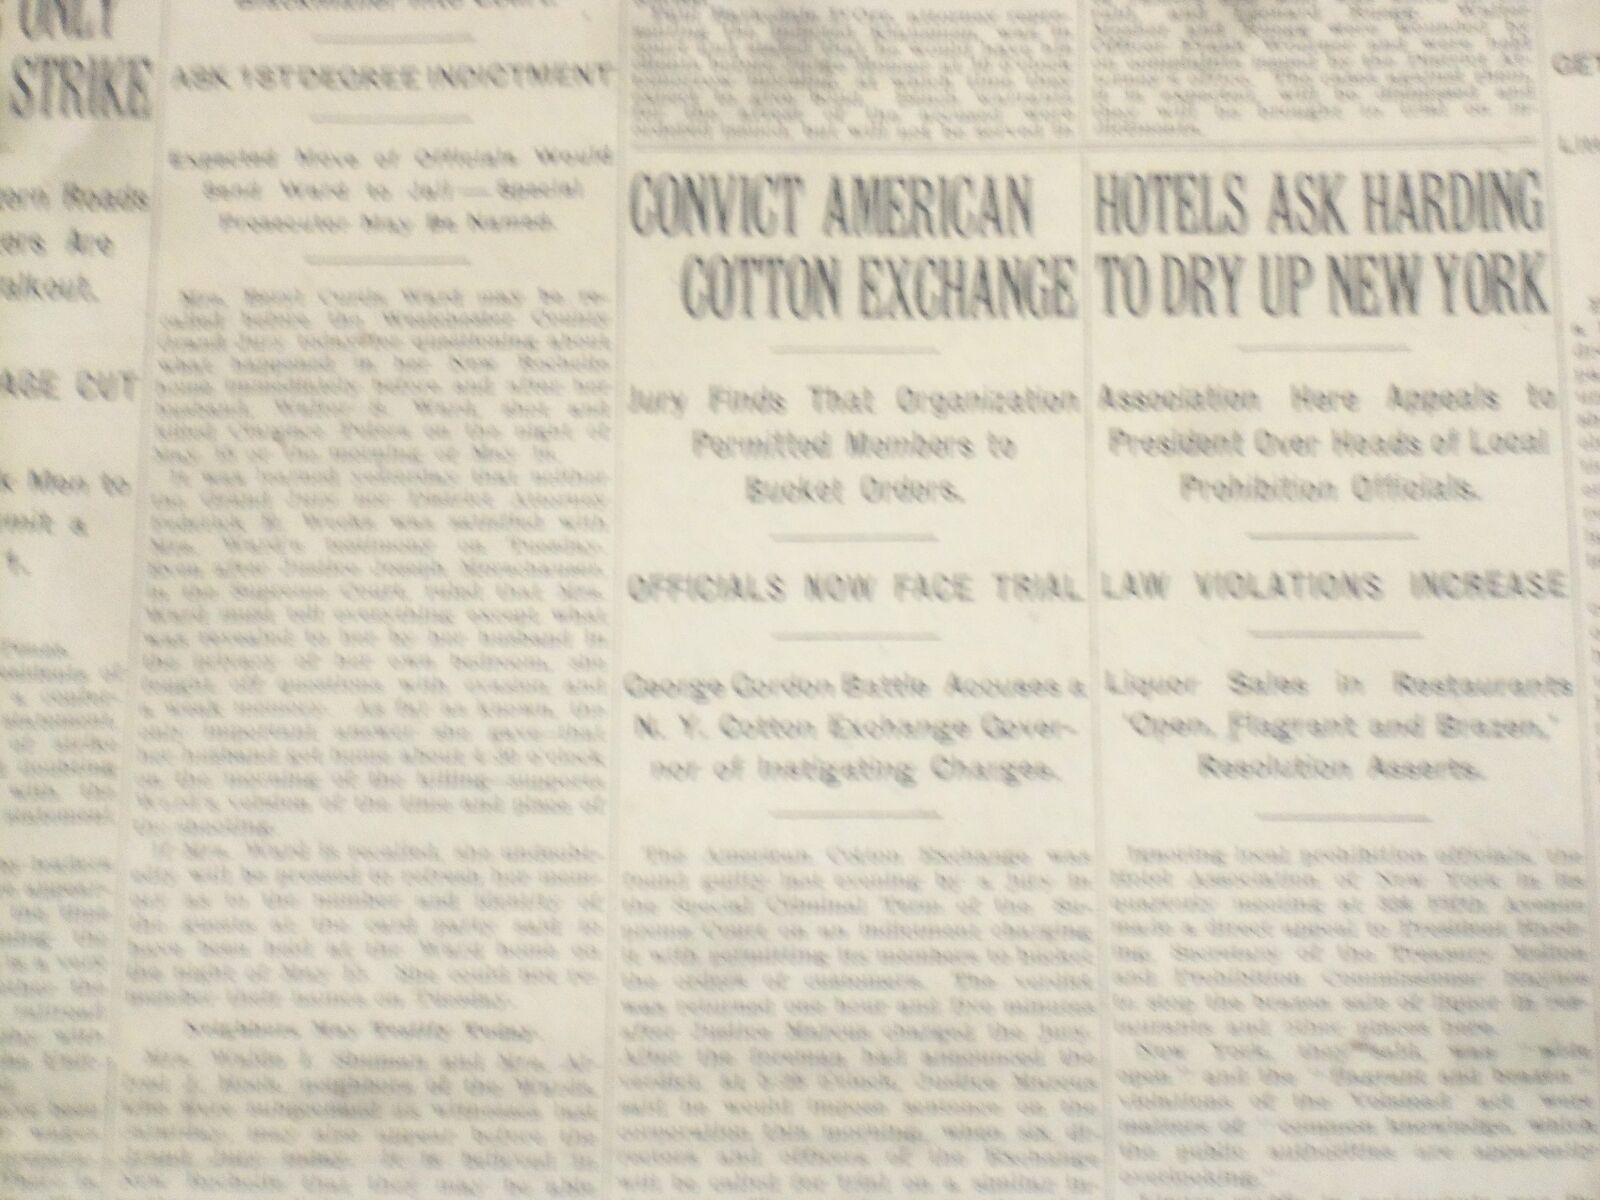 1922 JUNE 8 NEW YORK TIMES - CONVICT AMERICAN COTTON EXCHANGE - NT 8395